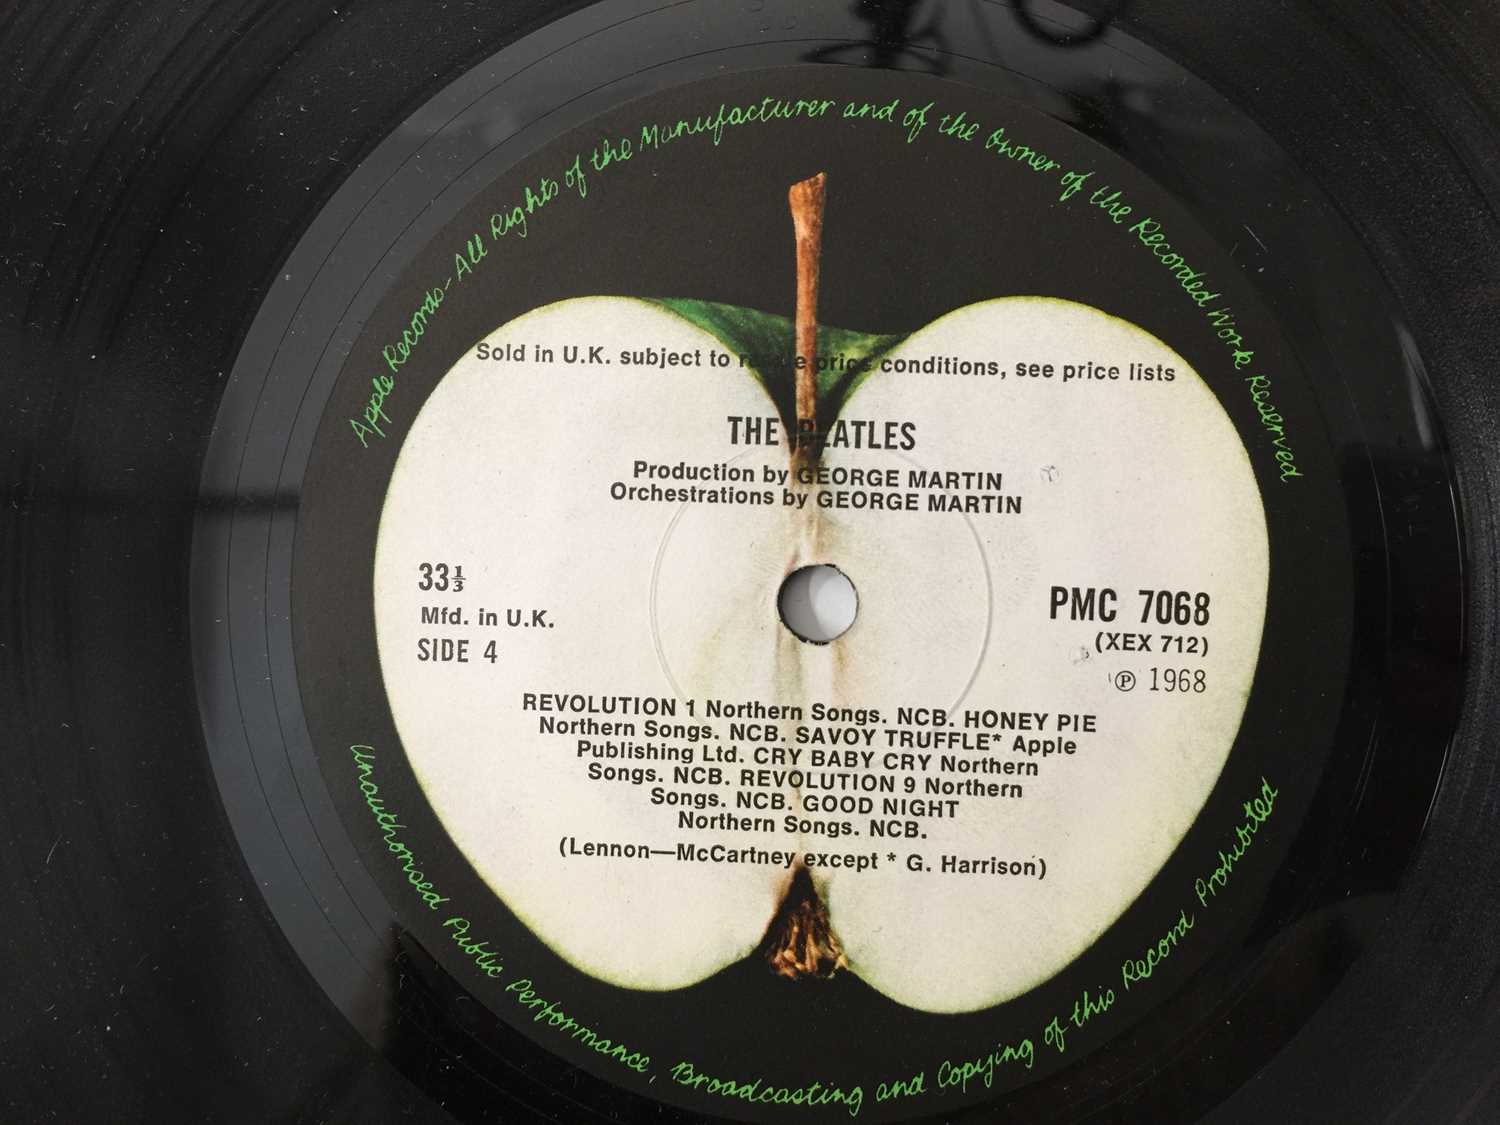 THE BEATLES - WHITE ALBUM LP (MONO/ STEREO HYBRID - PCS 7067/ PMC 7068) - Image 8 of 10